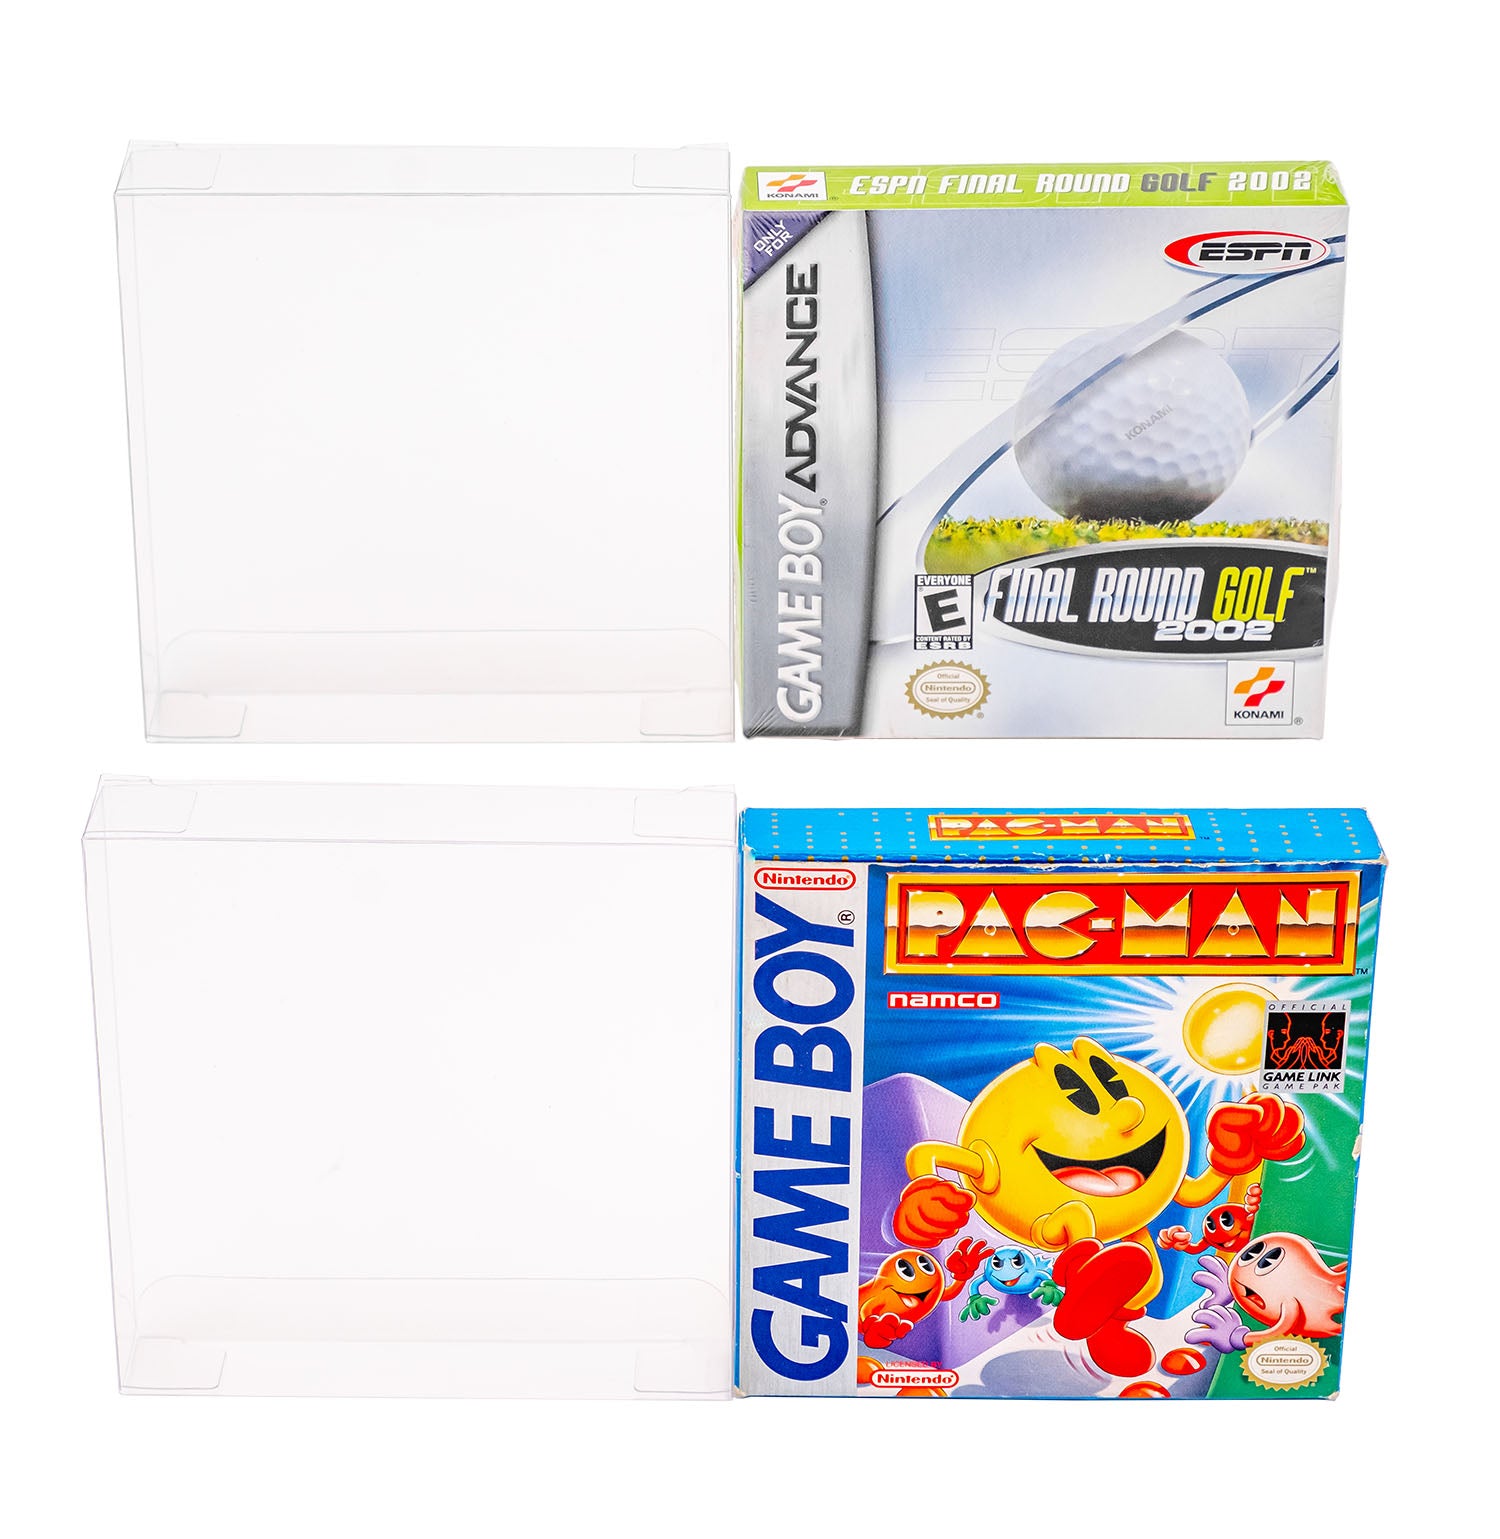 Platinum Protectors for Nintendo Game Boy & Game Boy Advance Game Boxes